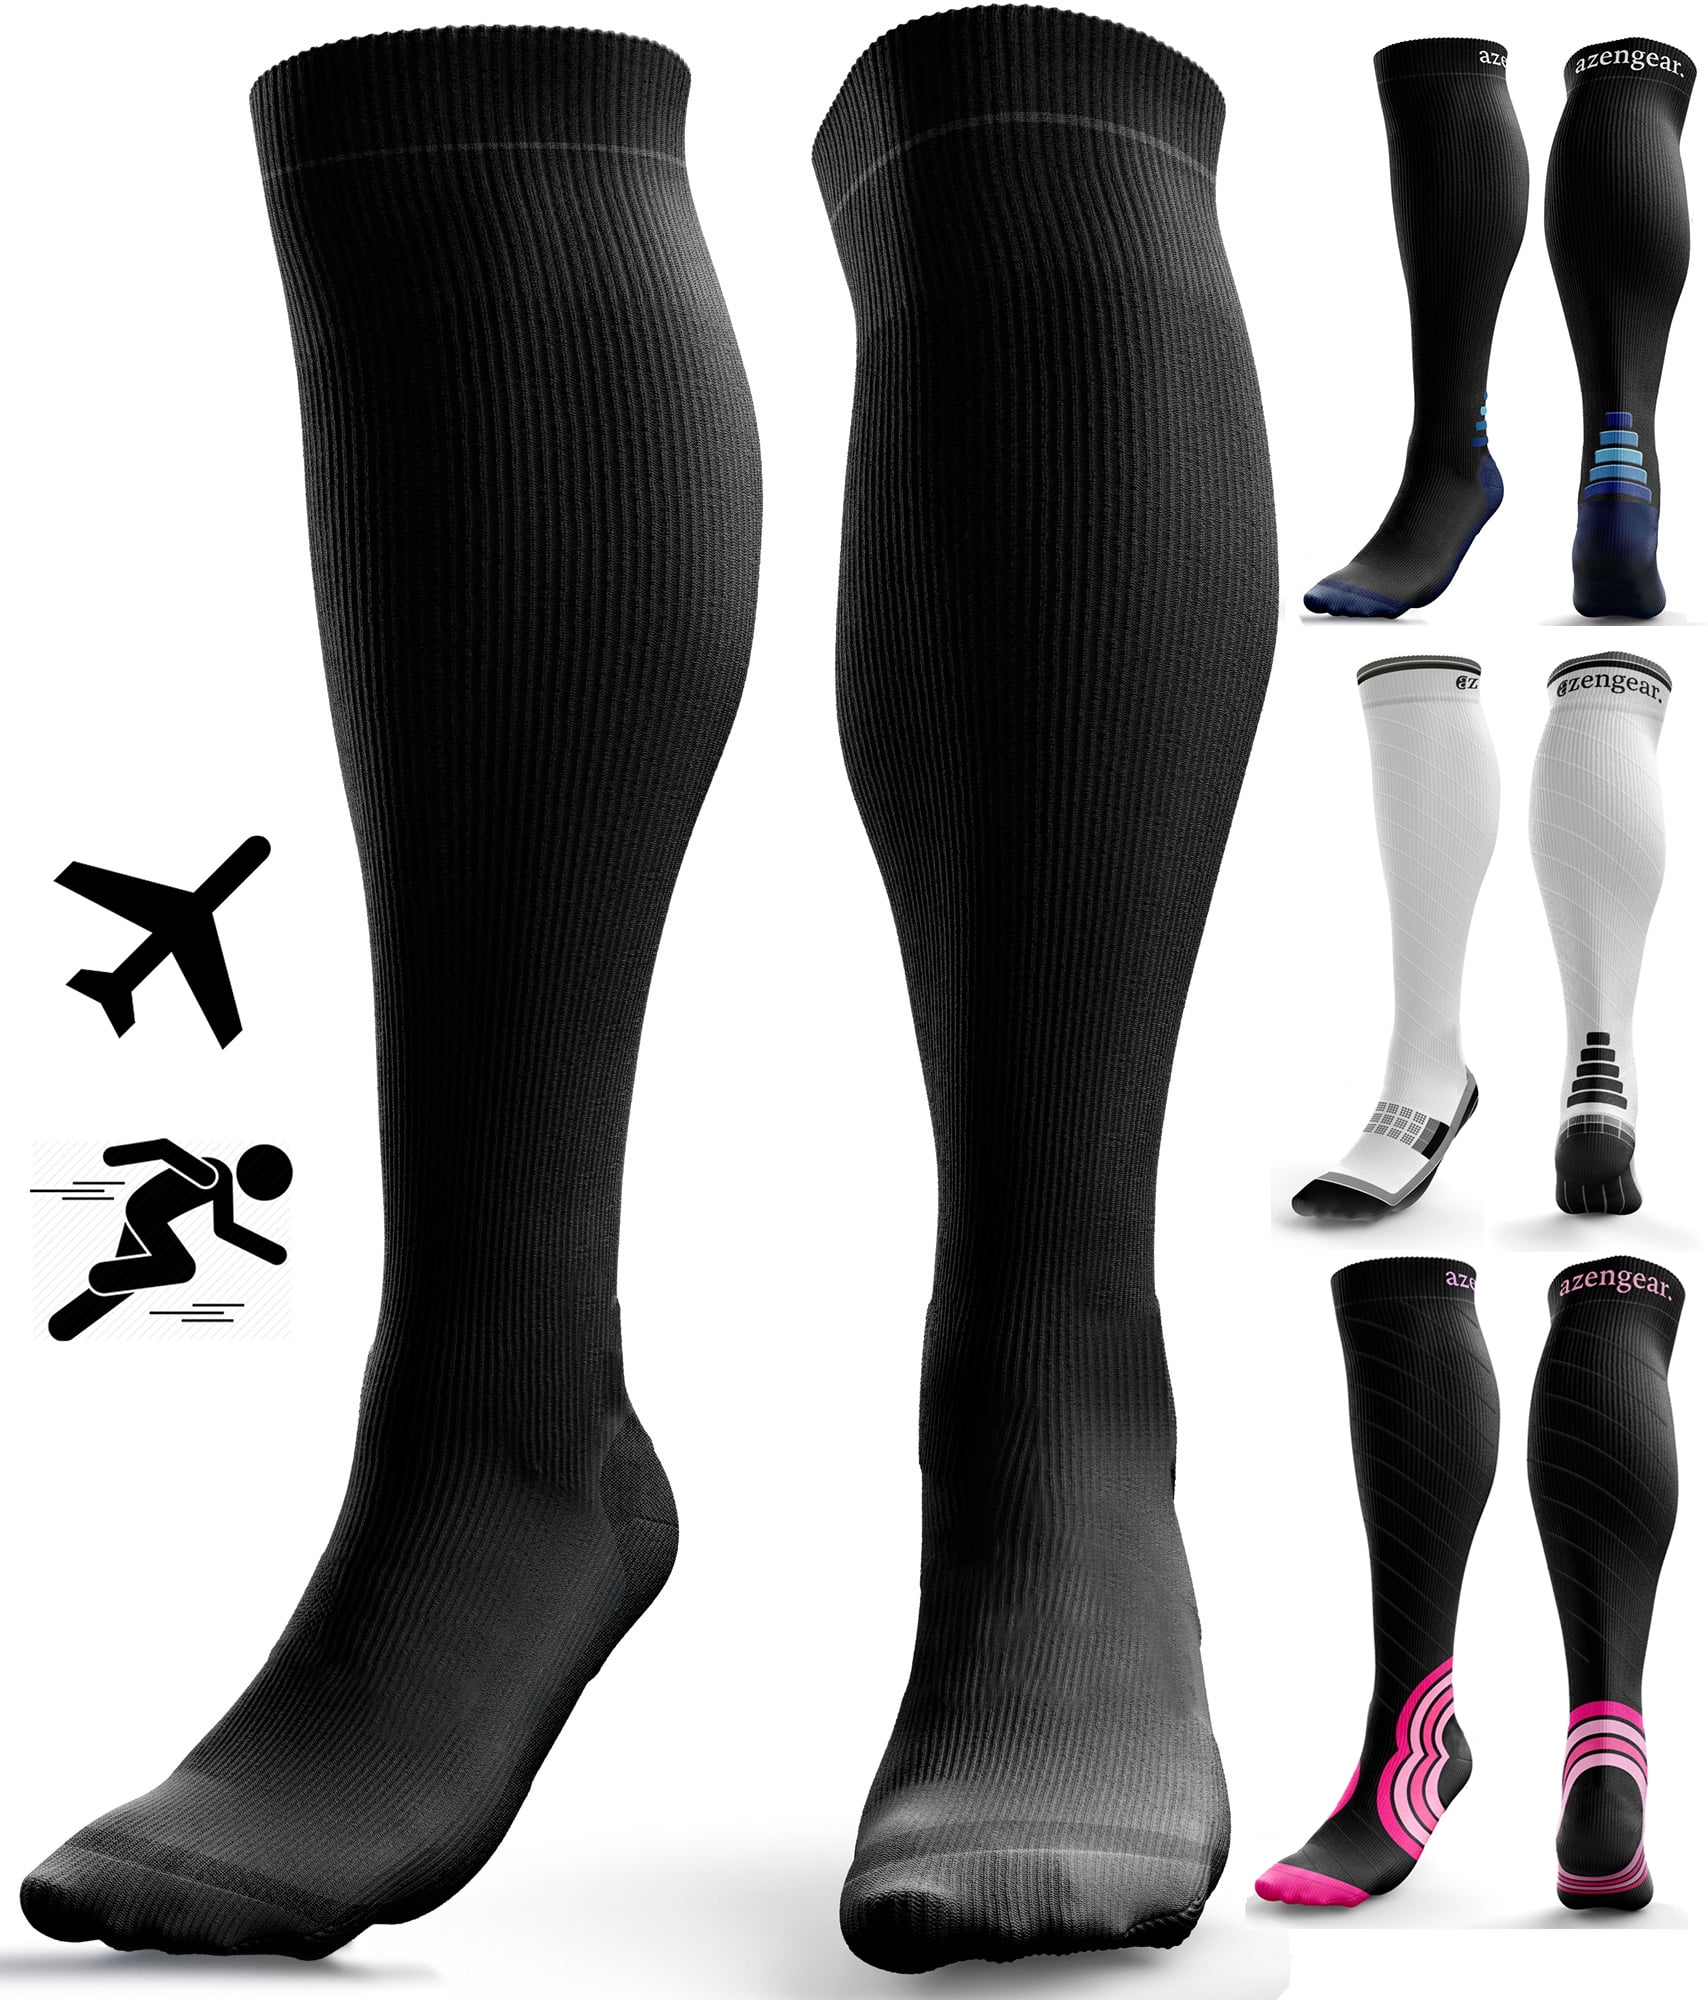 Compression Socks for Men and Women (20-30 mmHg) - Anti DVT Varicose Vein  Calf Support Stockings for Running, Shin Splints, Flight Travel, Maternity,  Pregnancy (S/M, Black) 